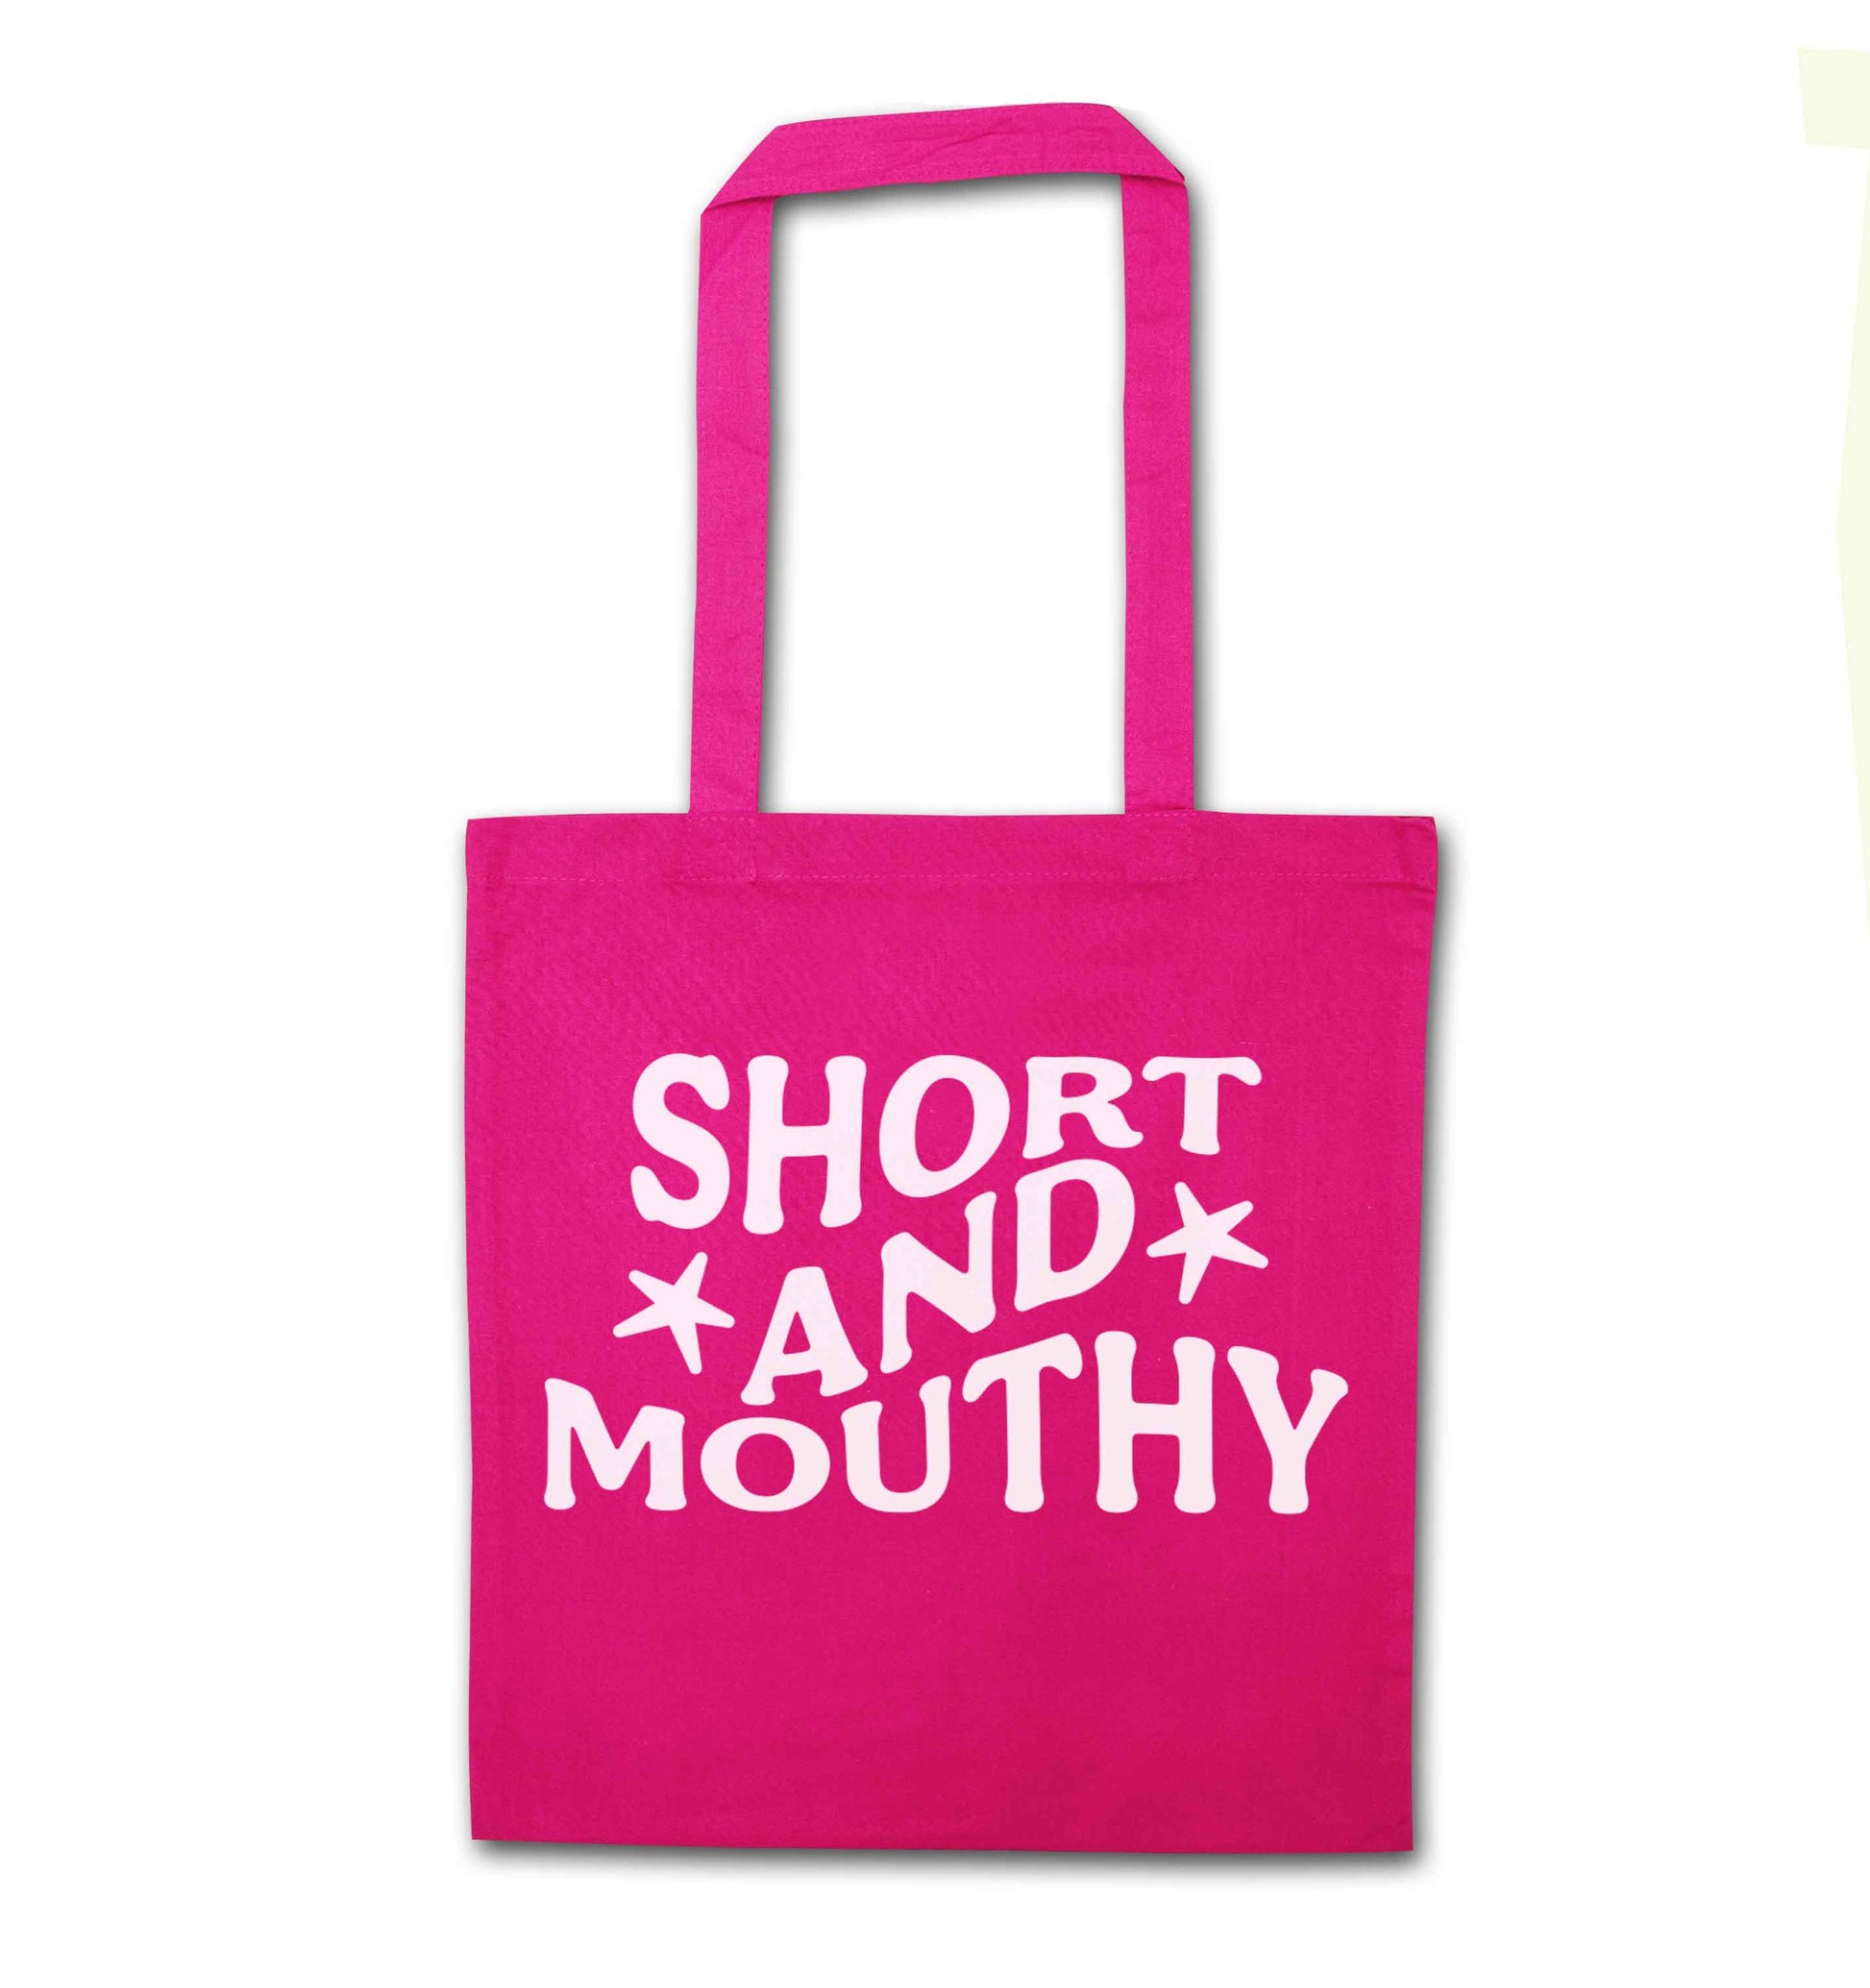 Short and mouthy pink tote bag